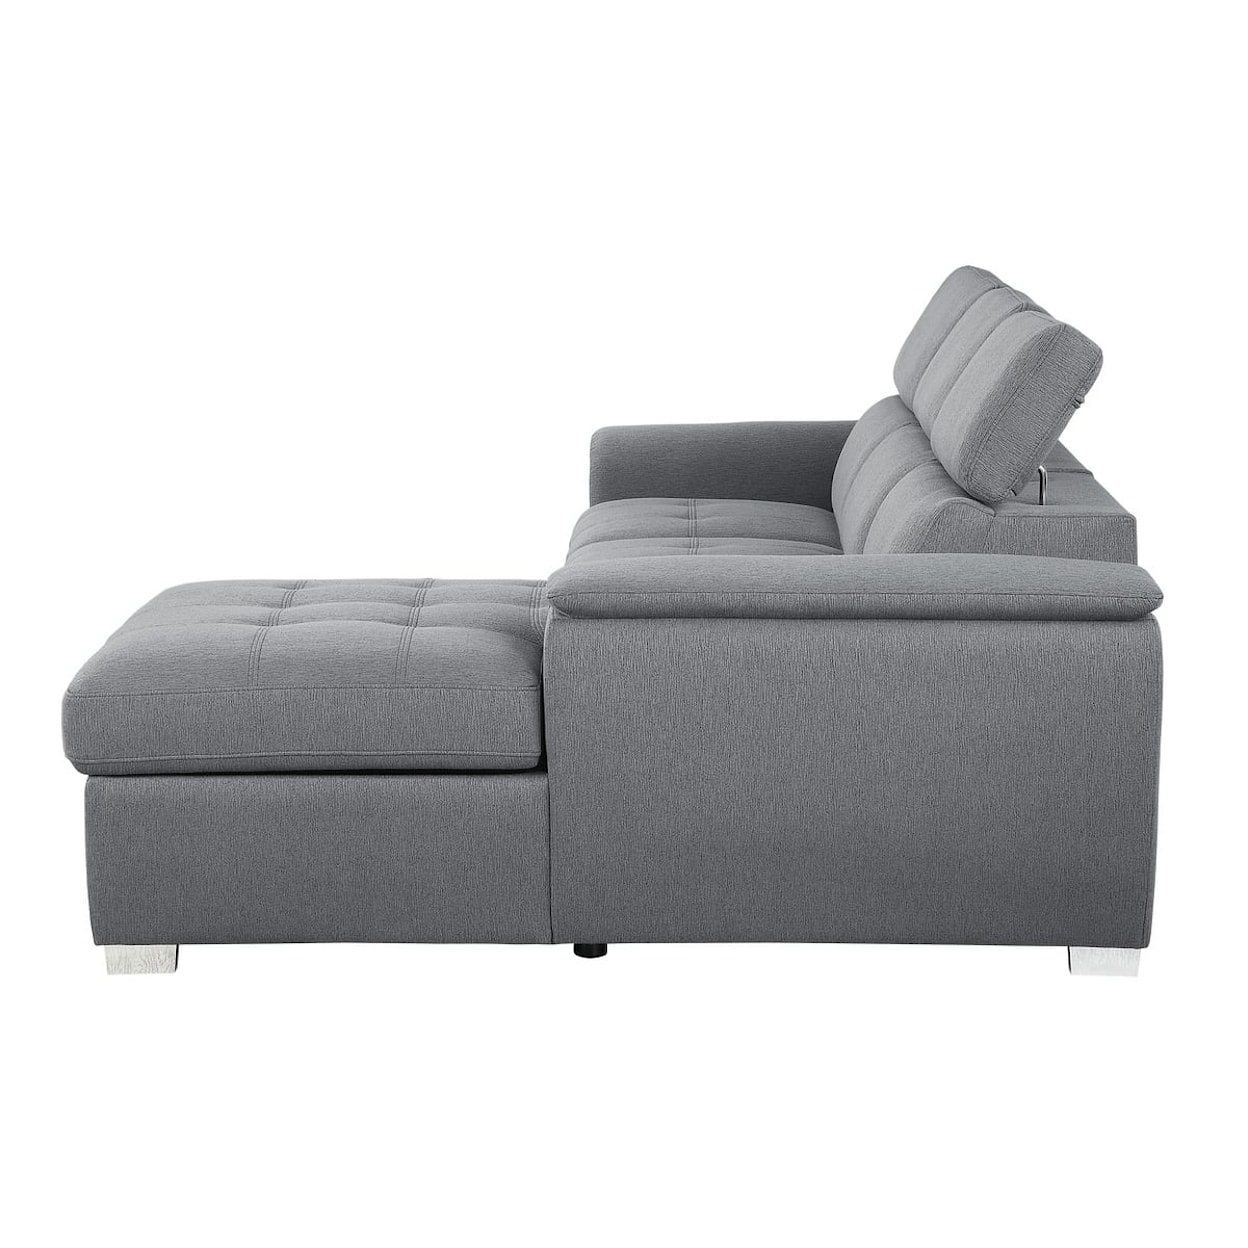 Homelegance Furniture Berel 2-Piece Sectional